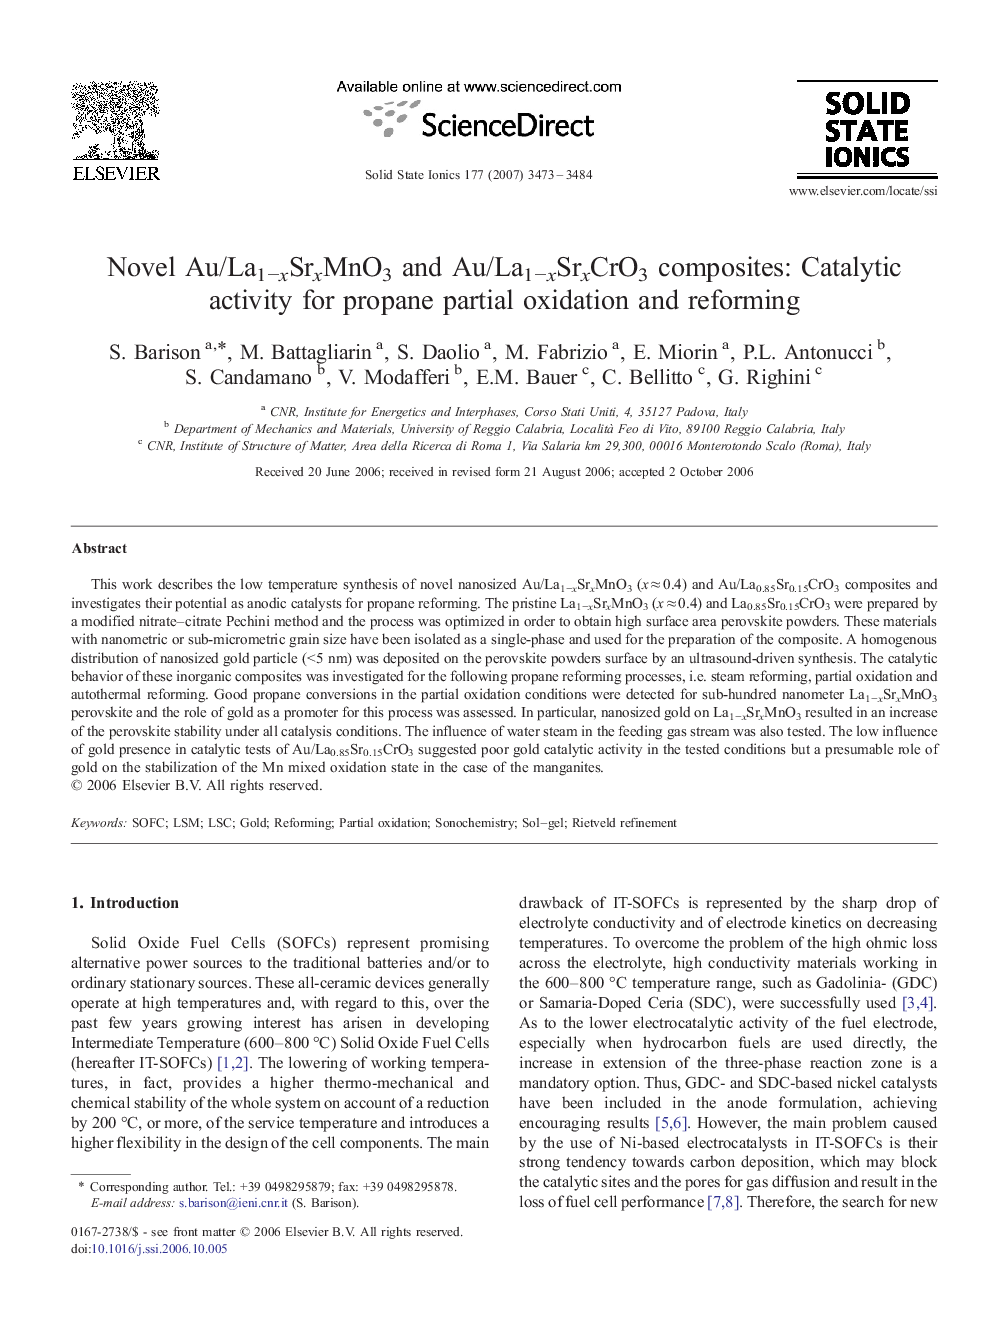 Novel Au/La1−xSrxMnO3 and Au/La1−xSrxCrO3 composites: Catalytic activity for propane partial oxidation and reforming